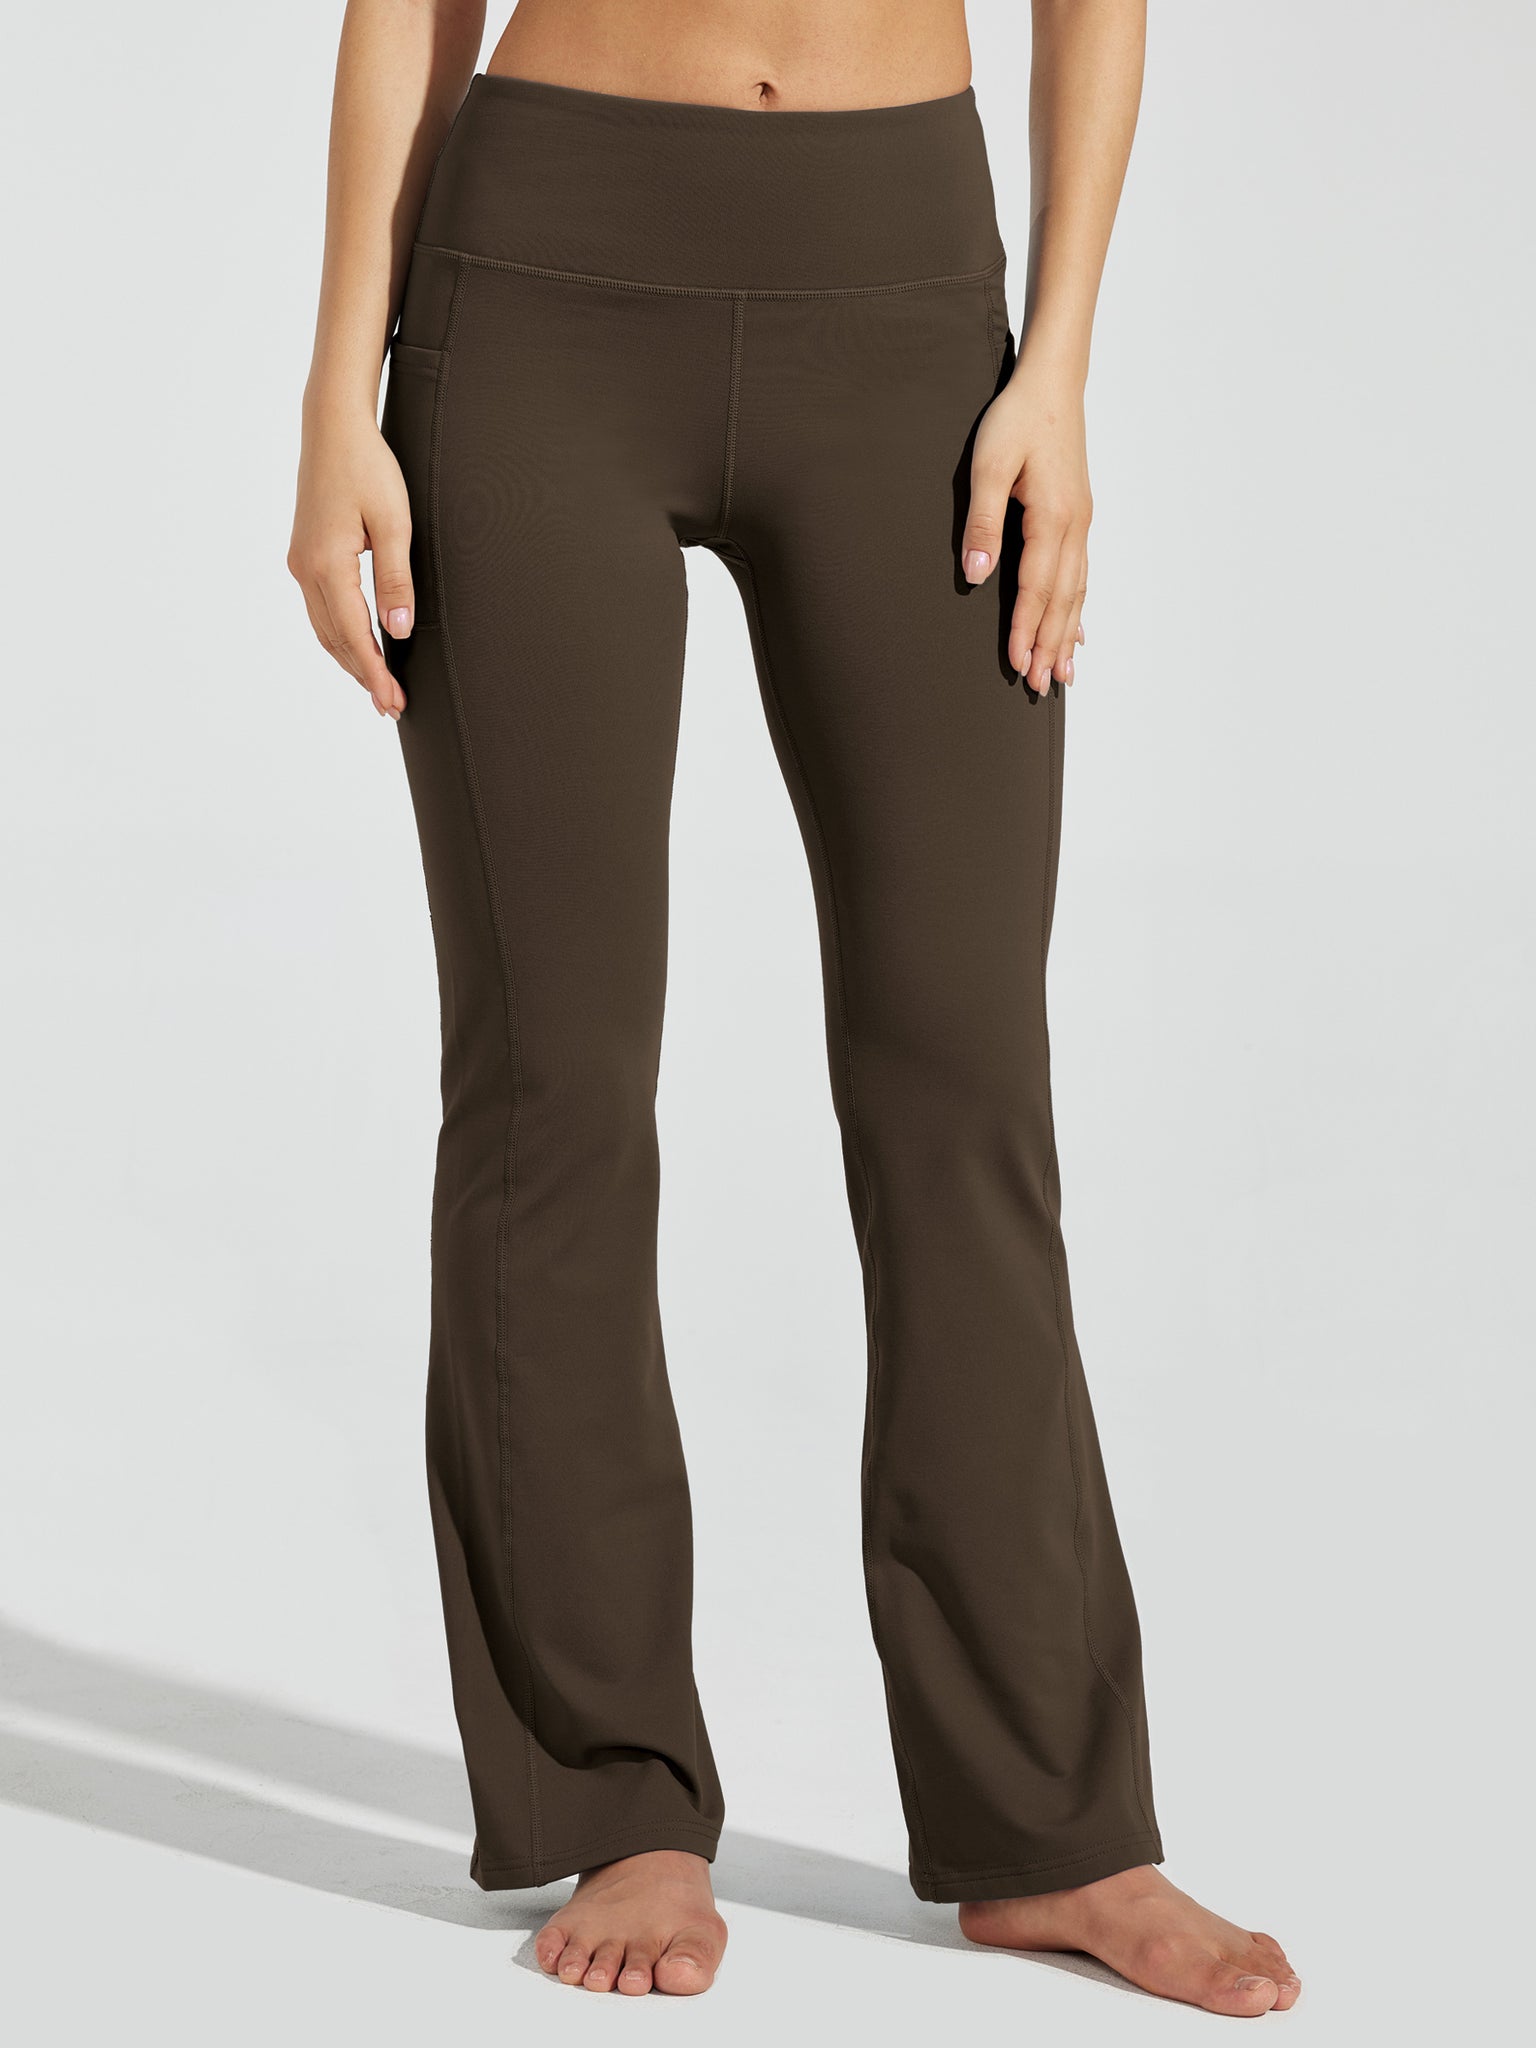 Women's Fleece Lined Bootcut Yoga Pants_Brown_model2